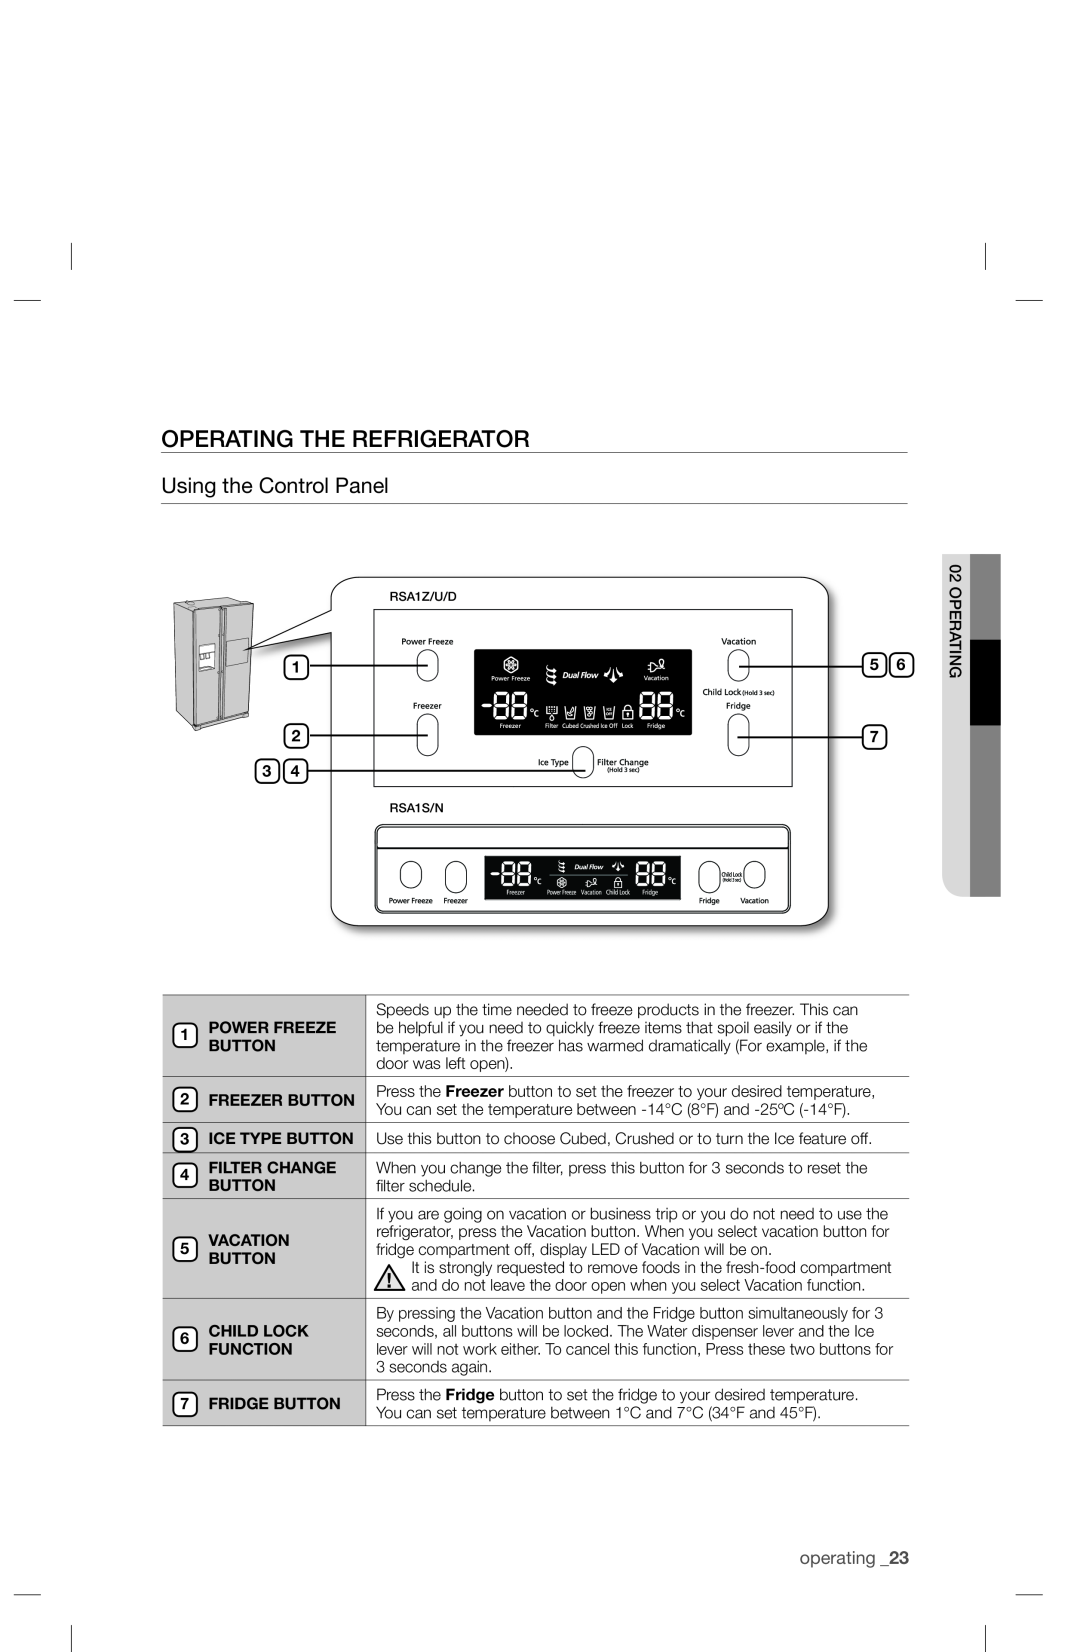 Samsung RSA1S***, RSA1Z***, RSA1U***, RSA1N***, RSA1D*** Operating The Refrigerator, Using the Control Panel, operating 